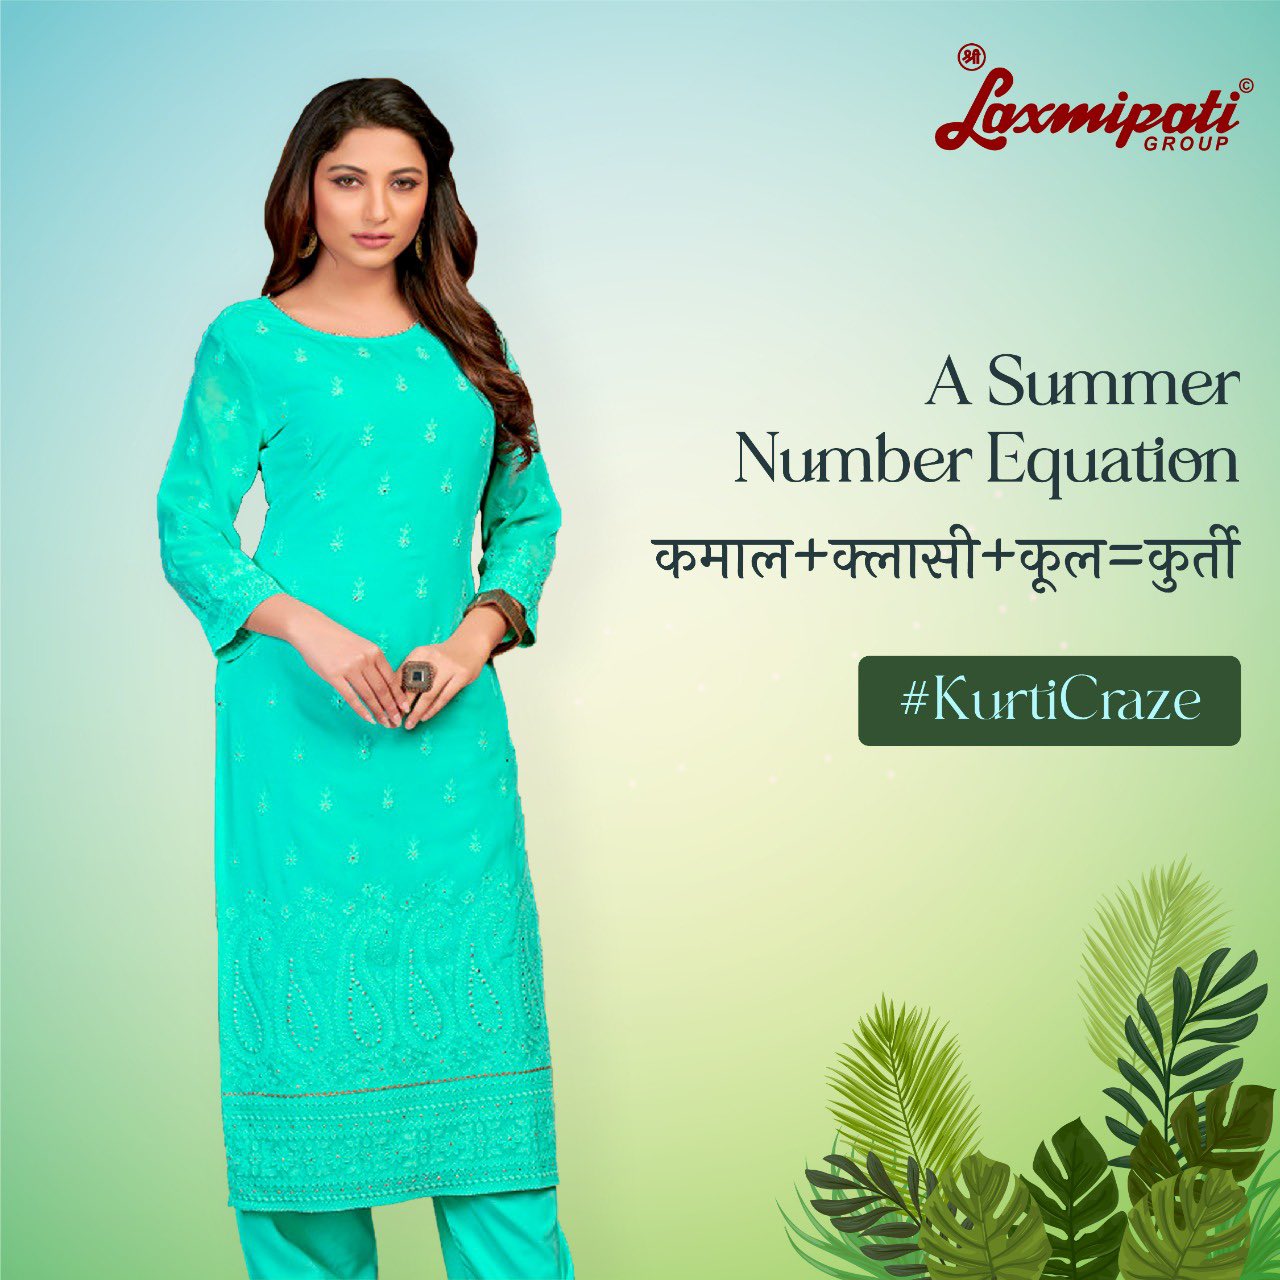 Buy Laxmipati saree by SHOPIESMART 18 at Amazon.in